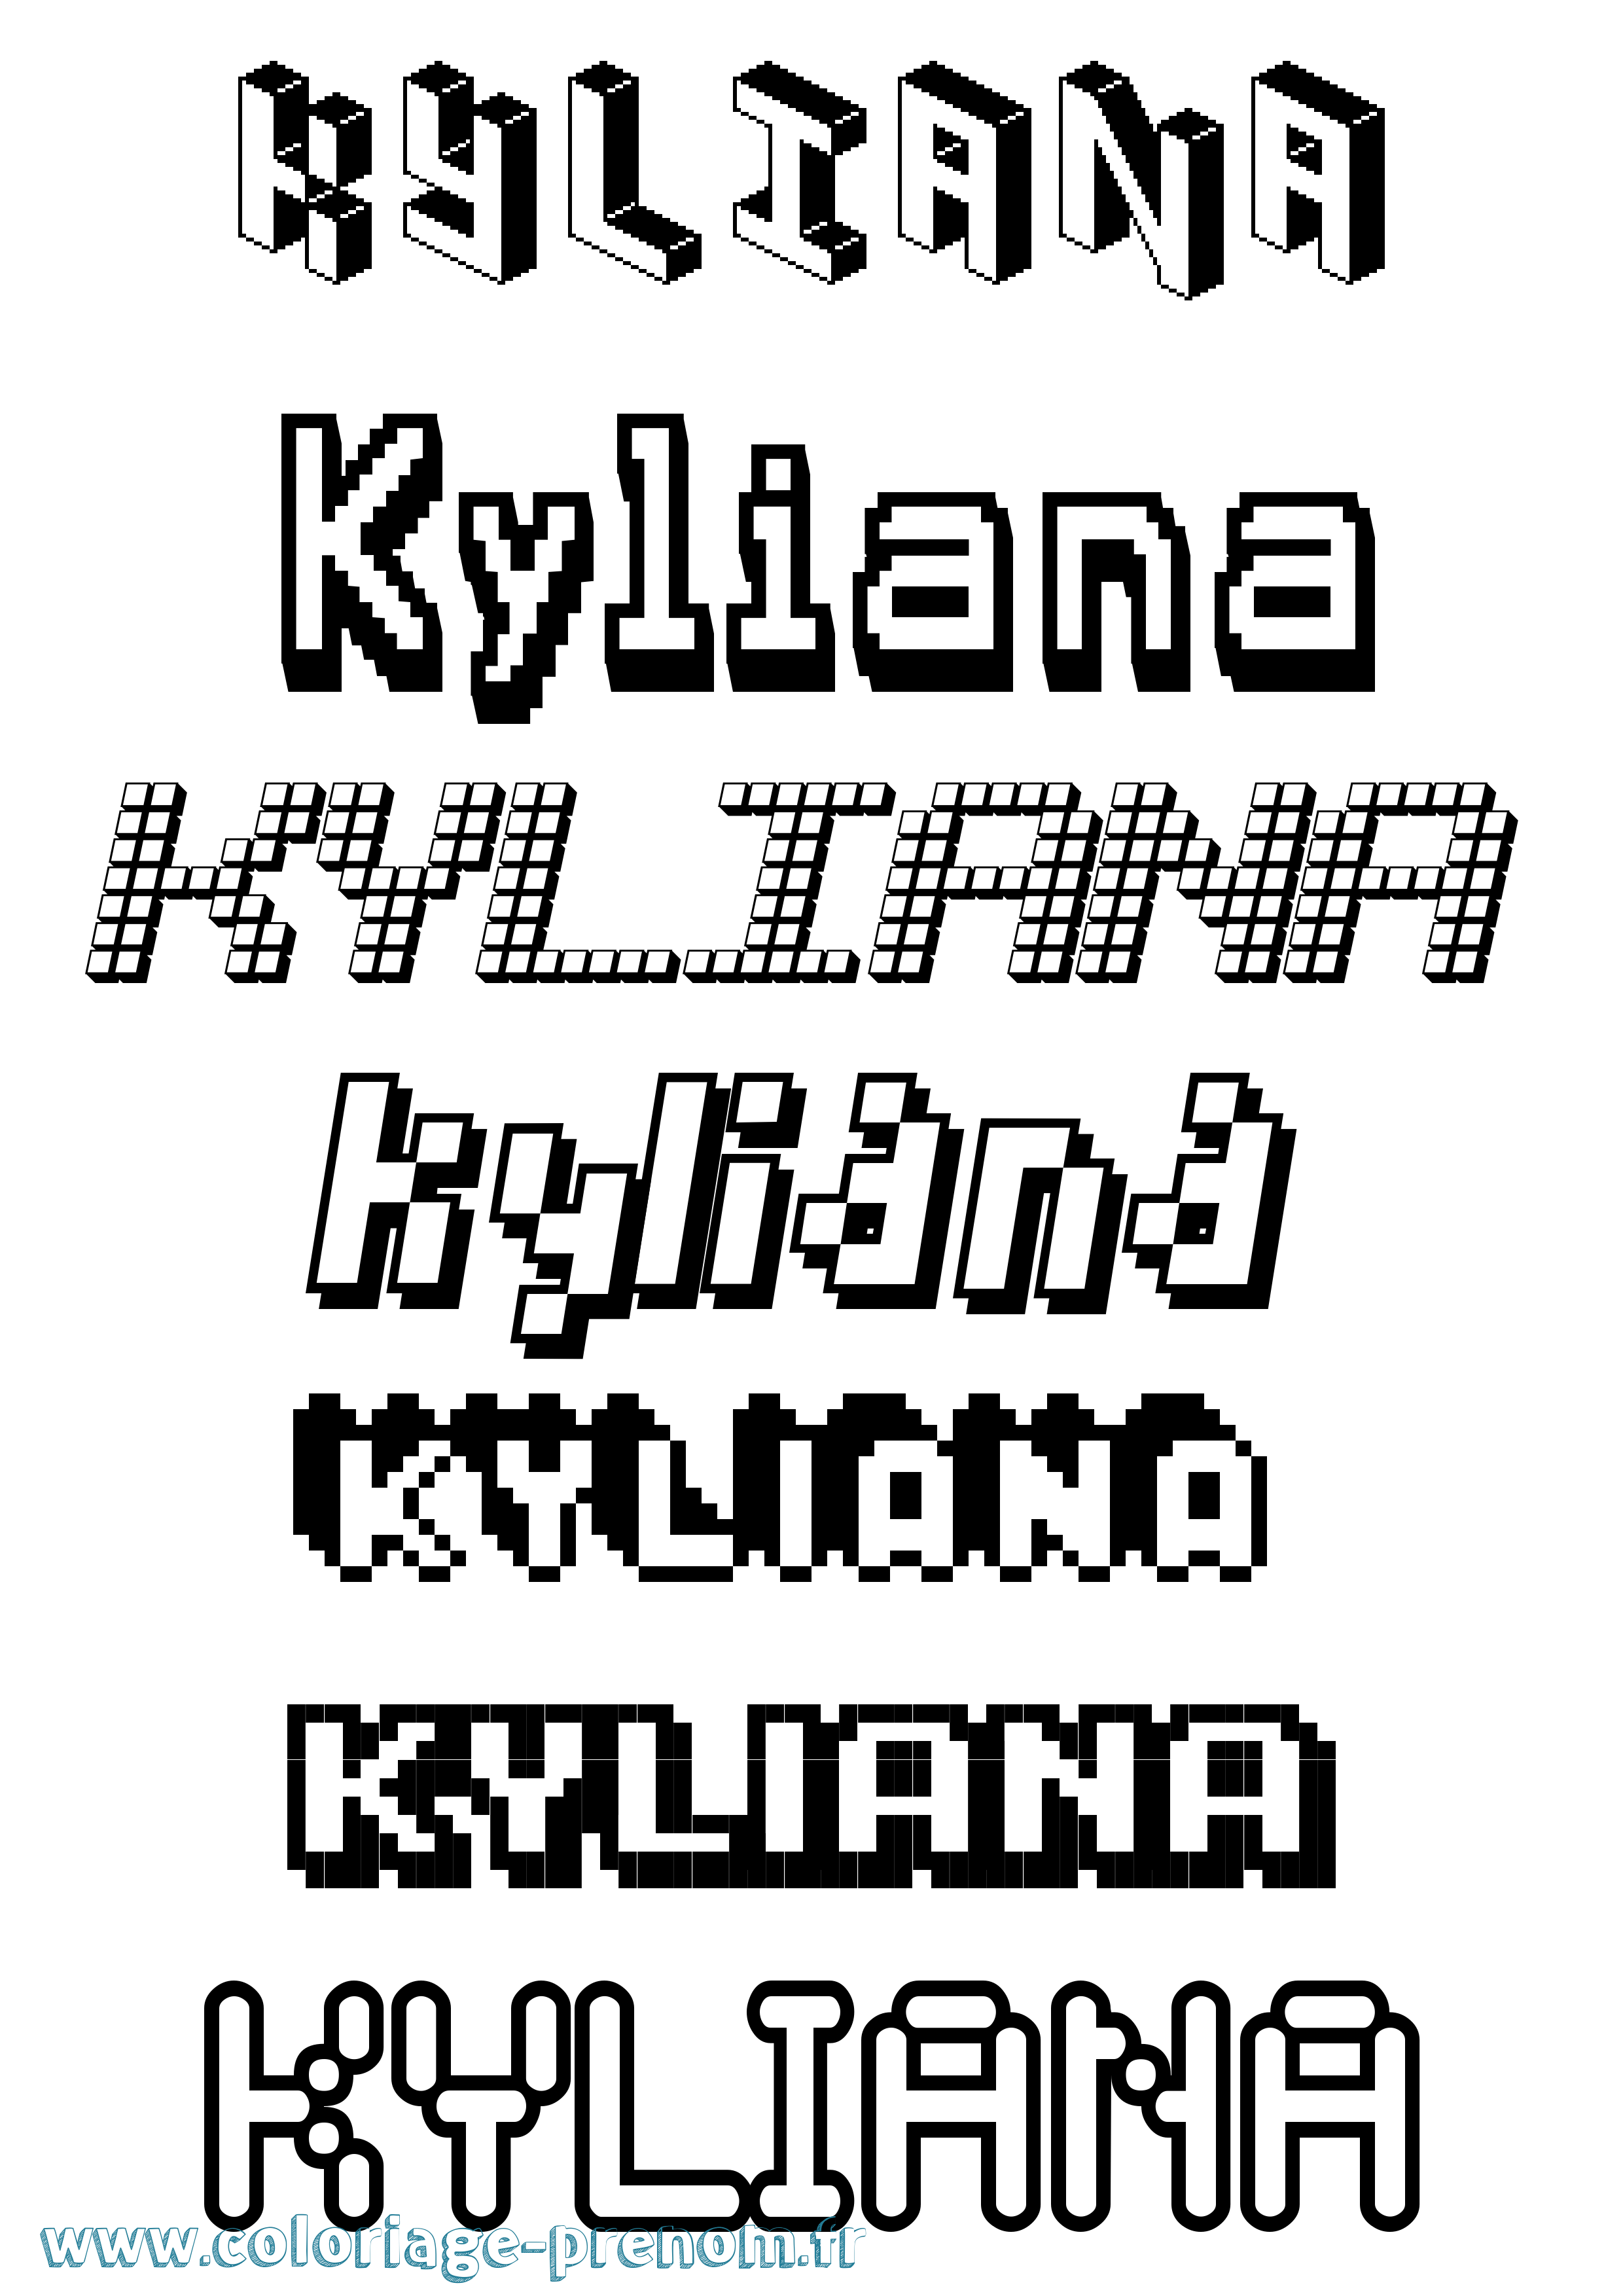 Coloriage prénom Kyliana Pixel